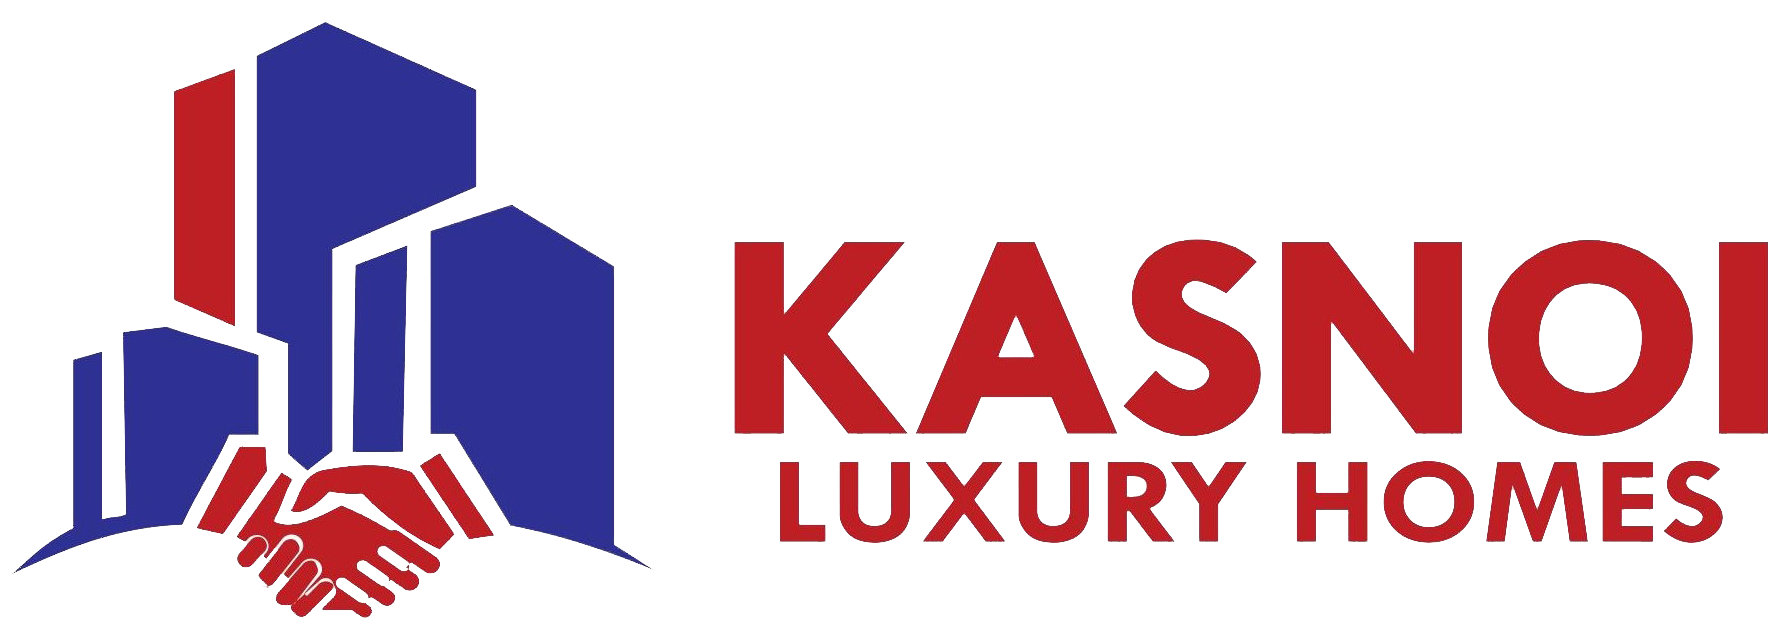 Kasnoi Luxury Homes Logo